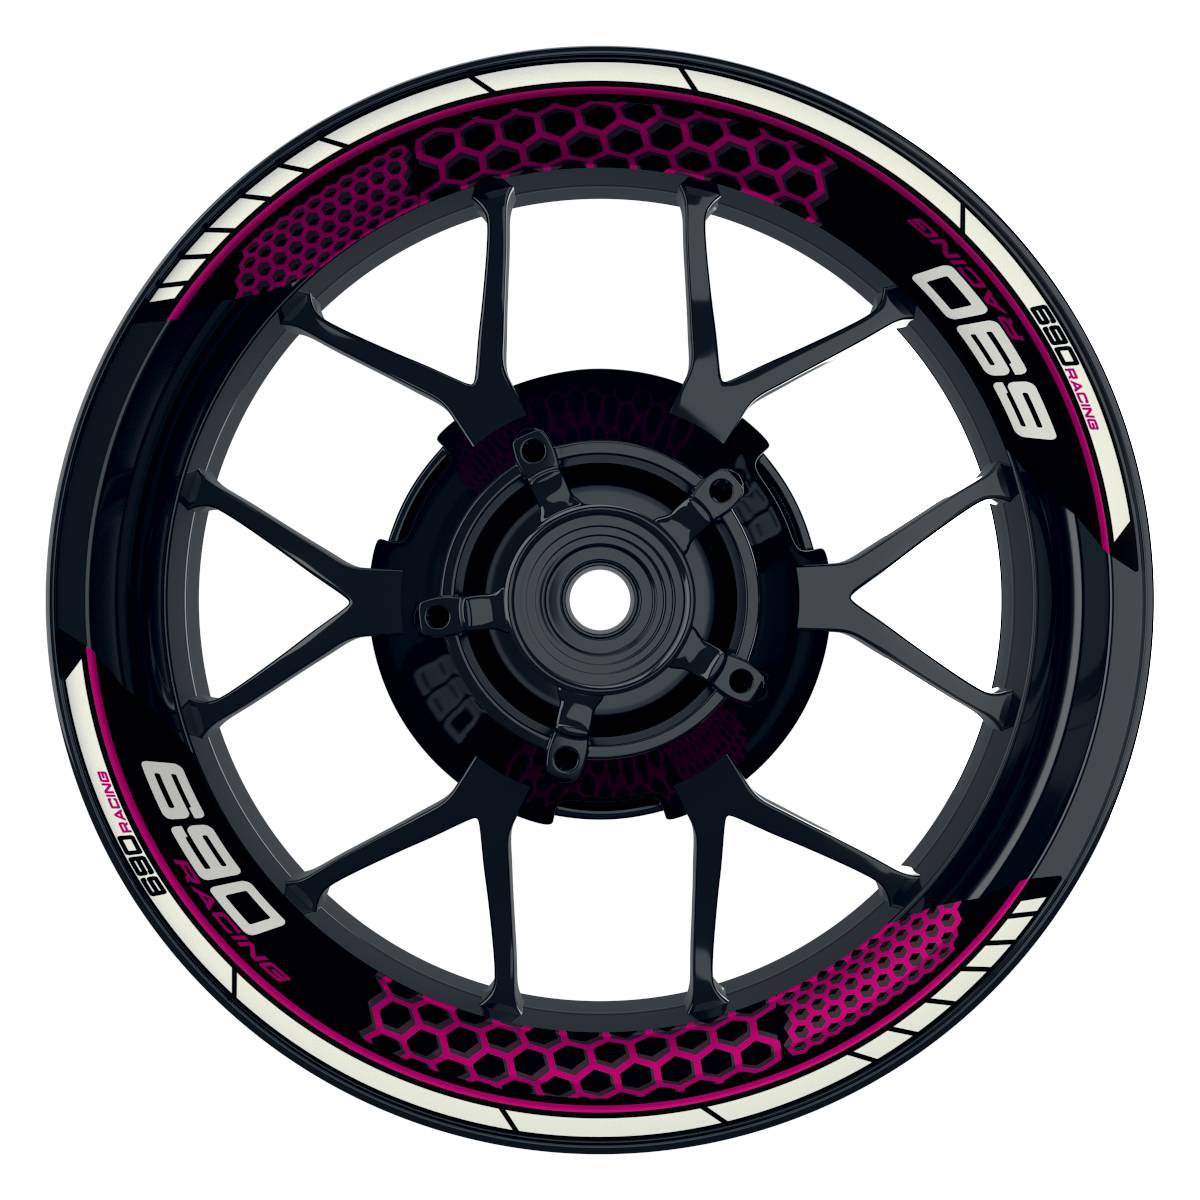 KTM Racing 690 Hexagon schwarz pink Frontansicht